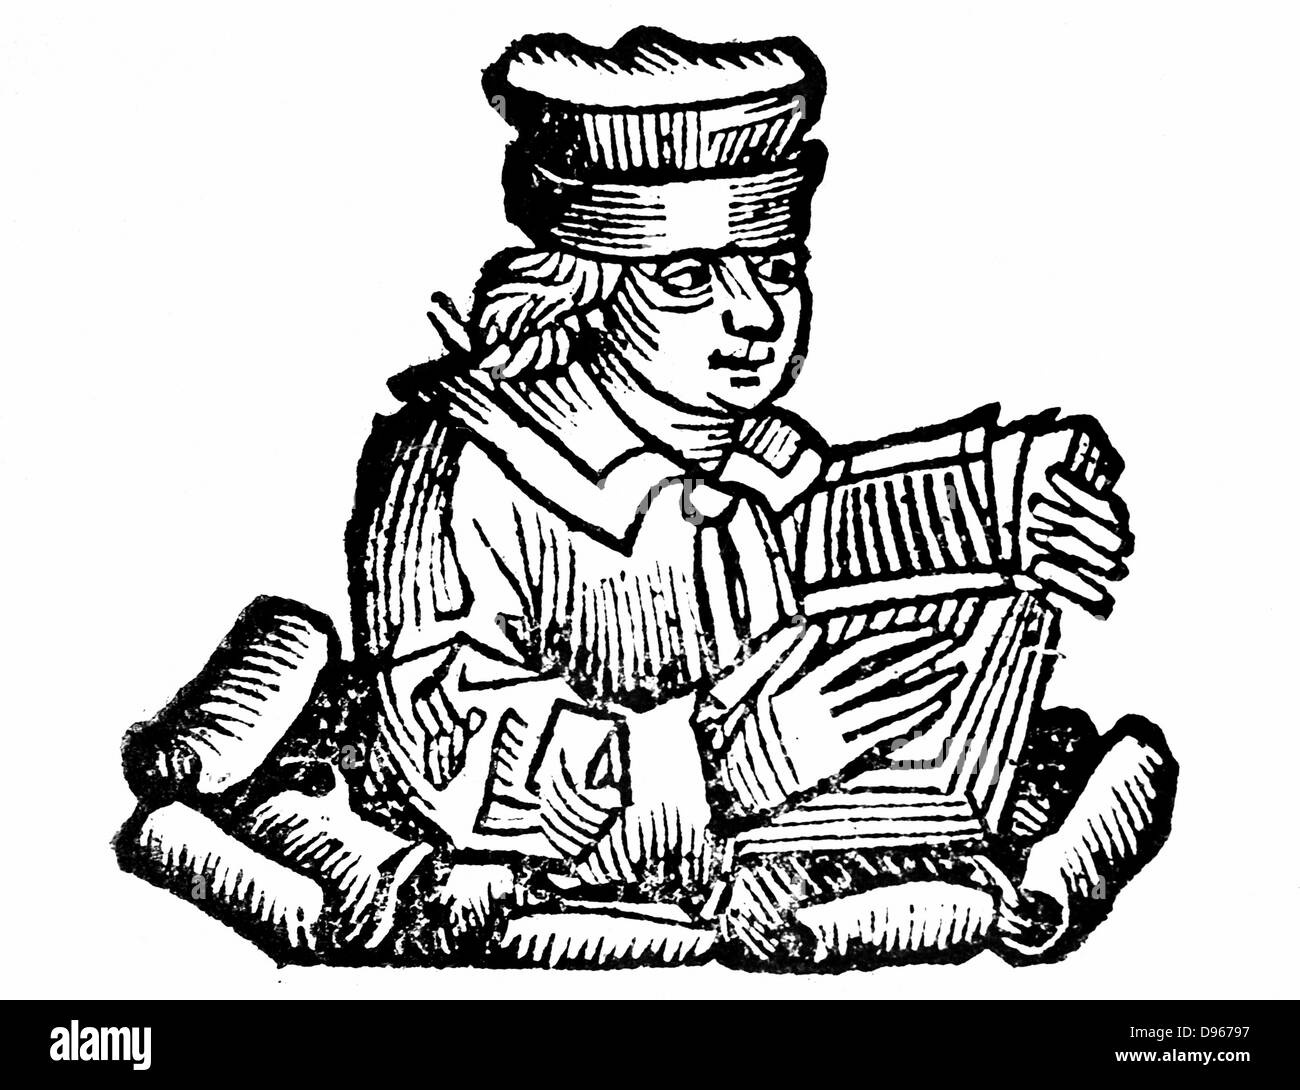 Aesop - vermutlich legendären griechischen fabulist. Herodot zufolge, er lebte im 6.Jahrhundert v. Chr.. Holzschnitt von Hartmann Schedel "Liber chronicarum mundi" (Chronik) Nürnberg Nürnberg 1493 Stockfoto